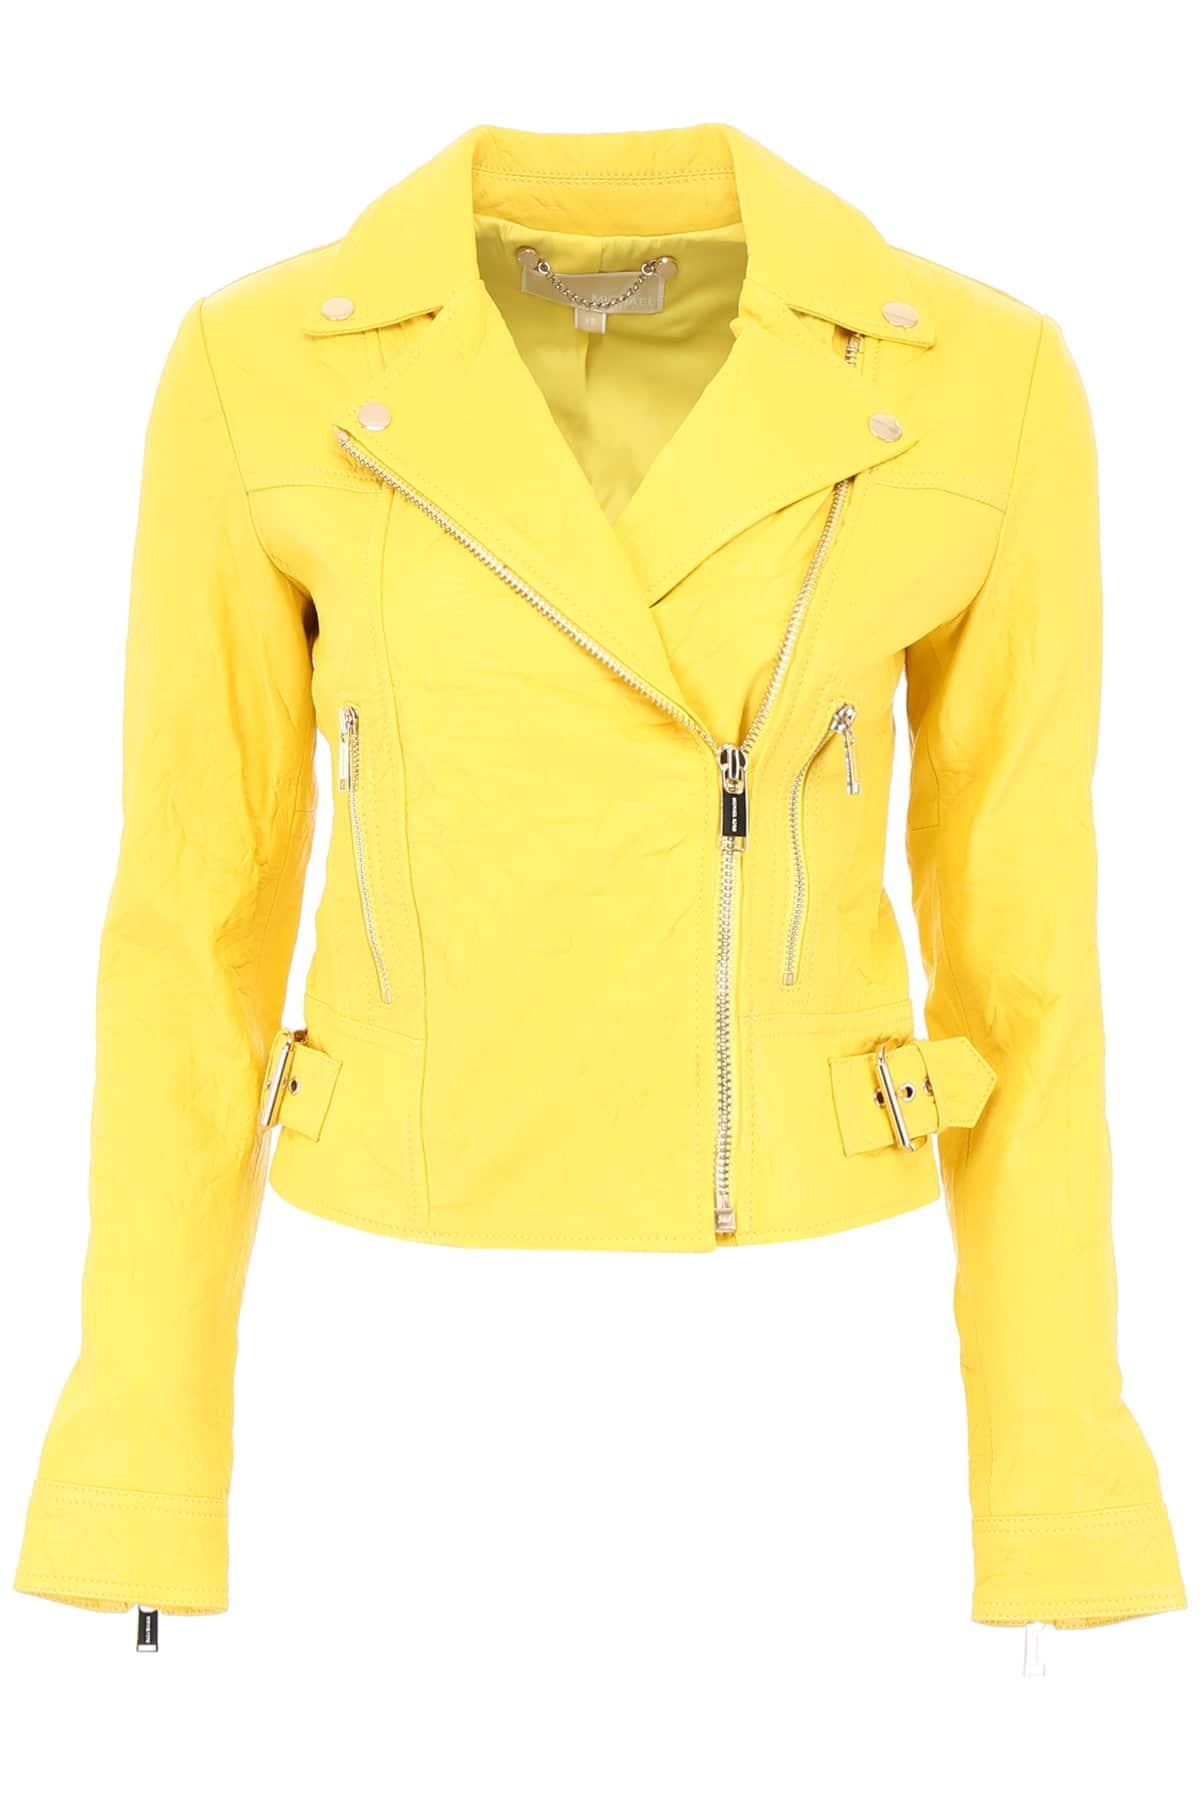 MICHAEL Michael Kors Leather Biker Jacket in Yellow - Lyst